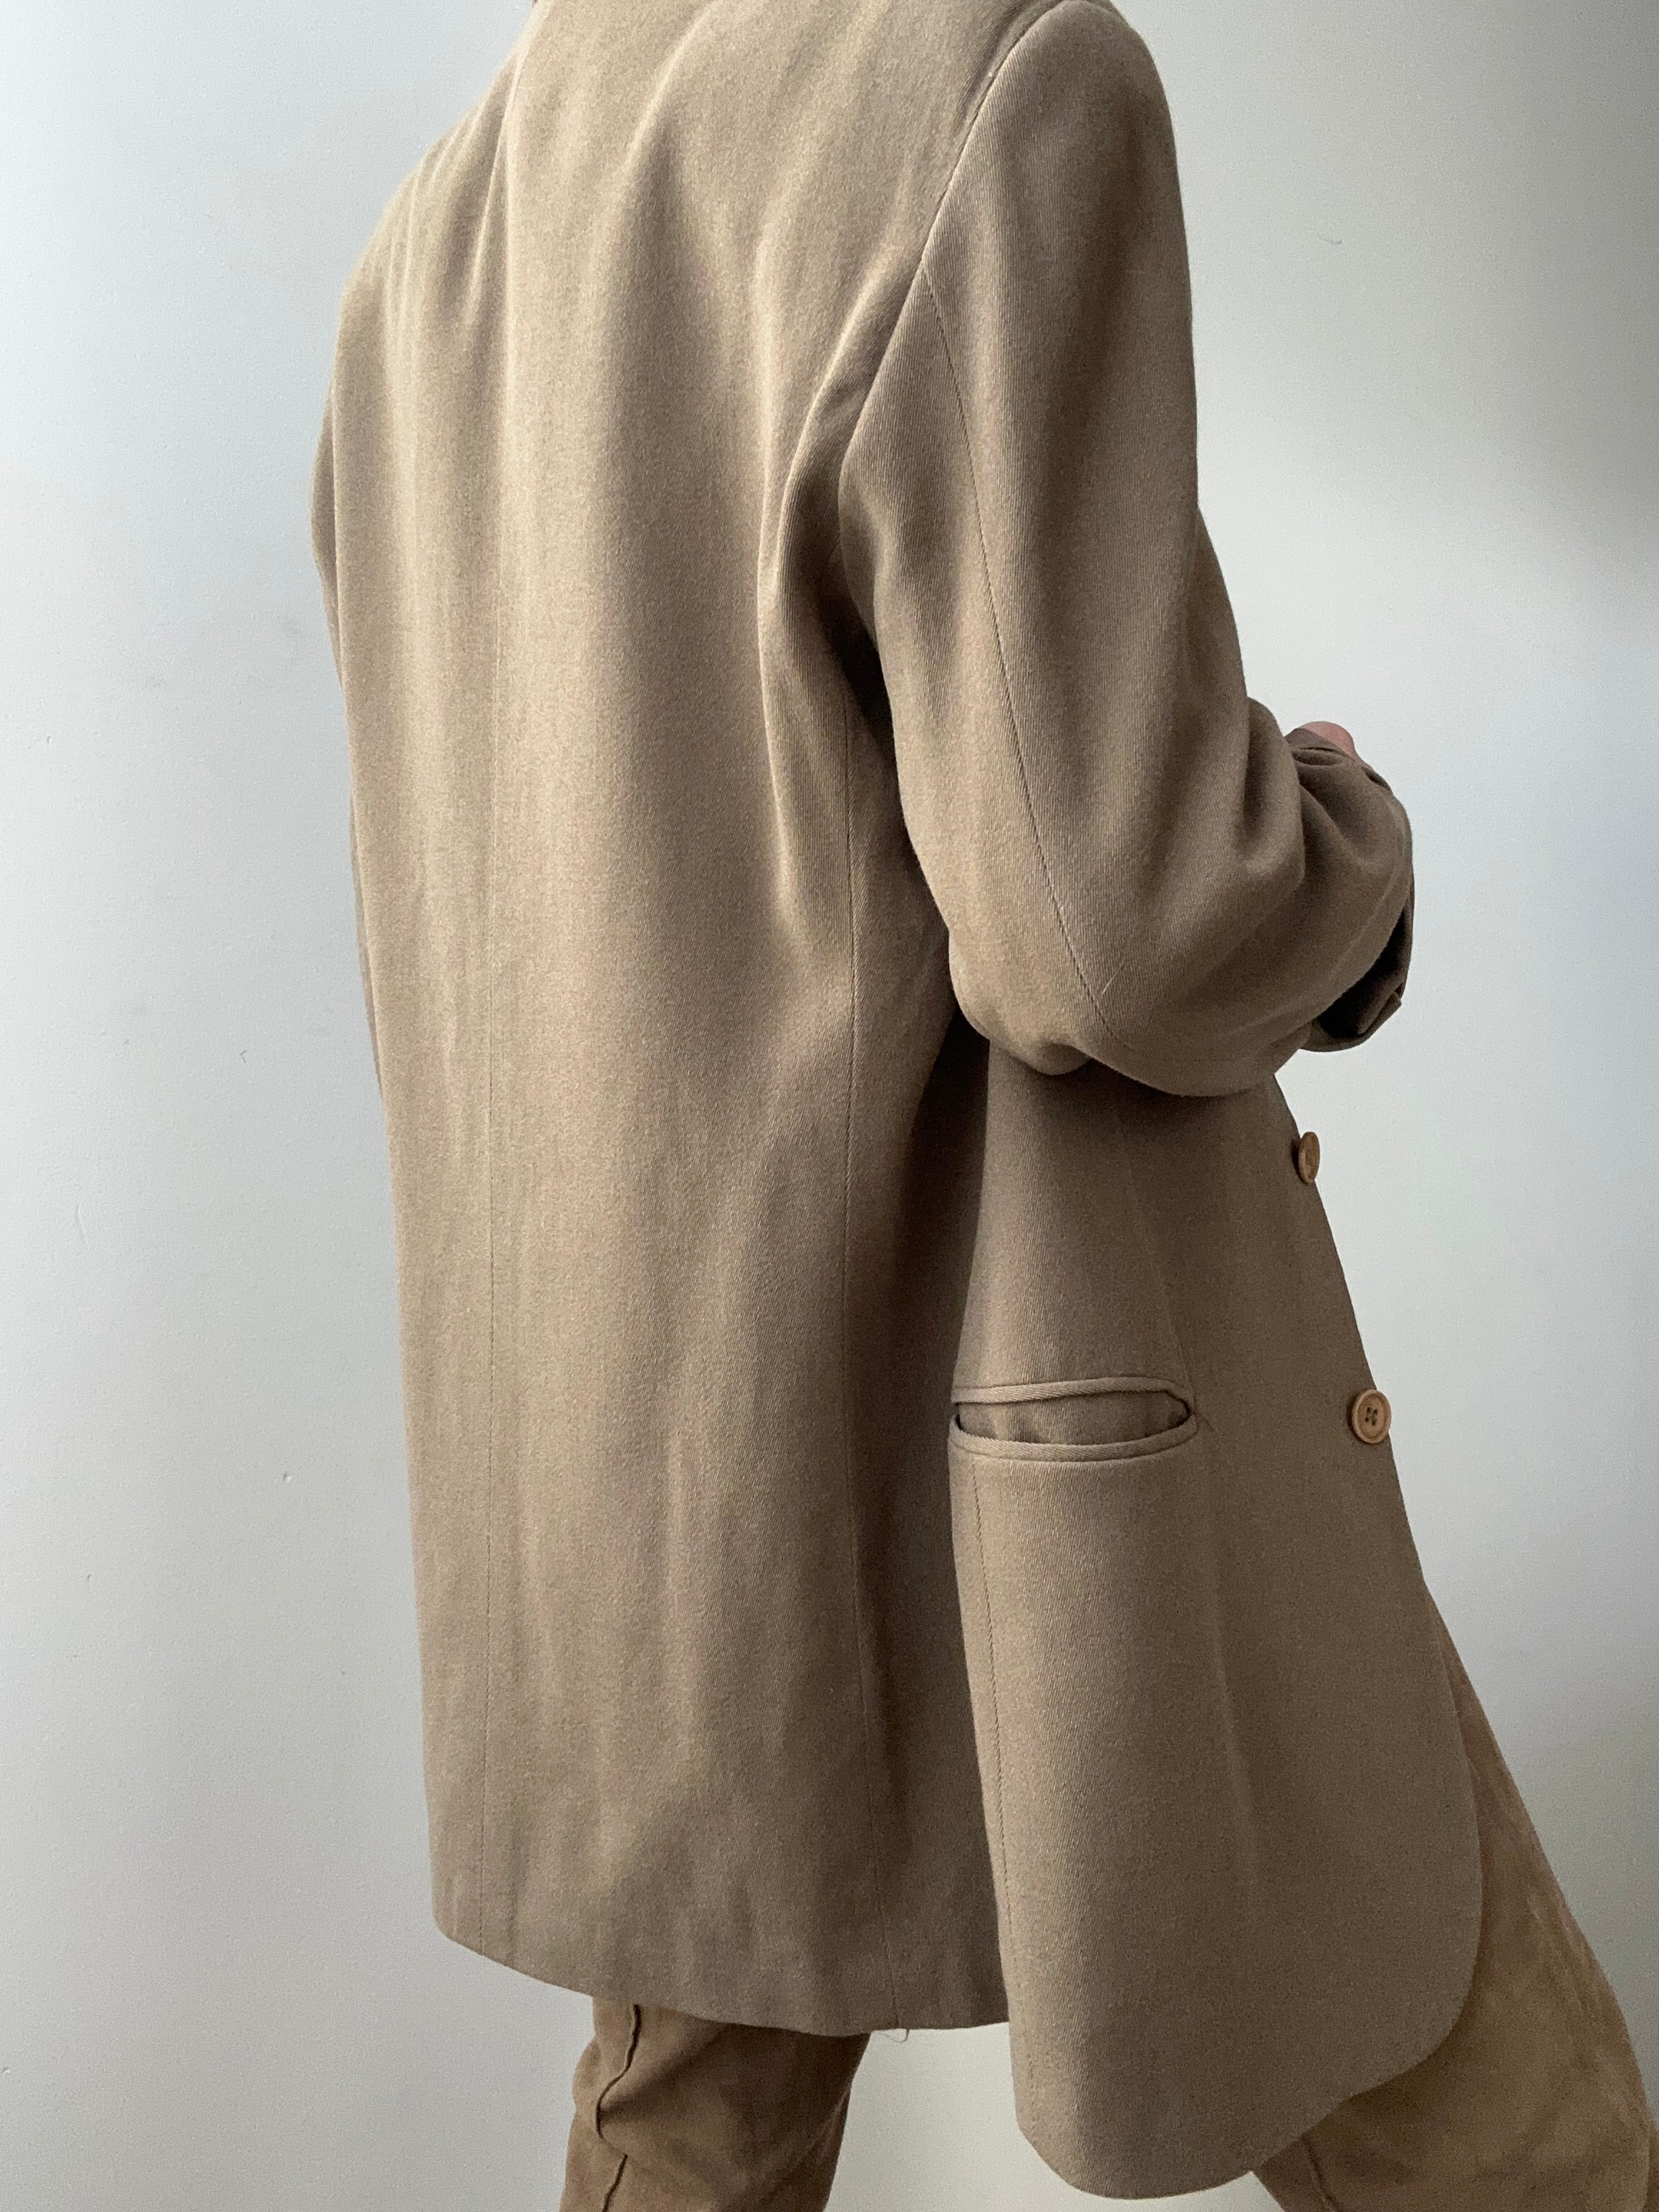 Emporio Armani Jackets Medium Tan Vintage Blazer